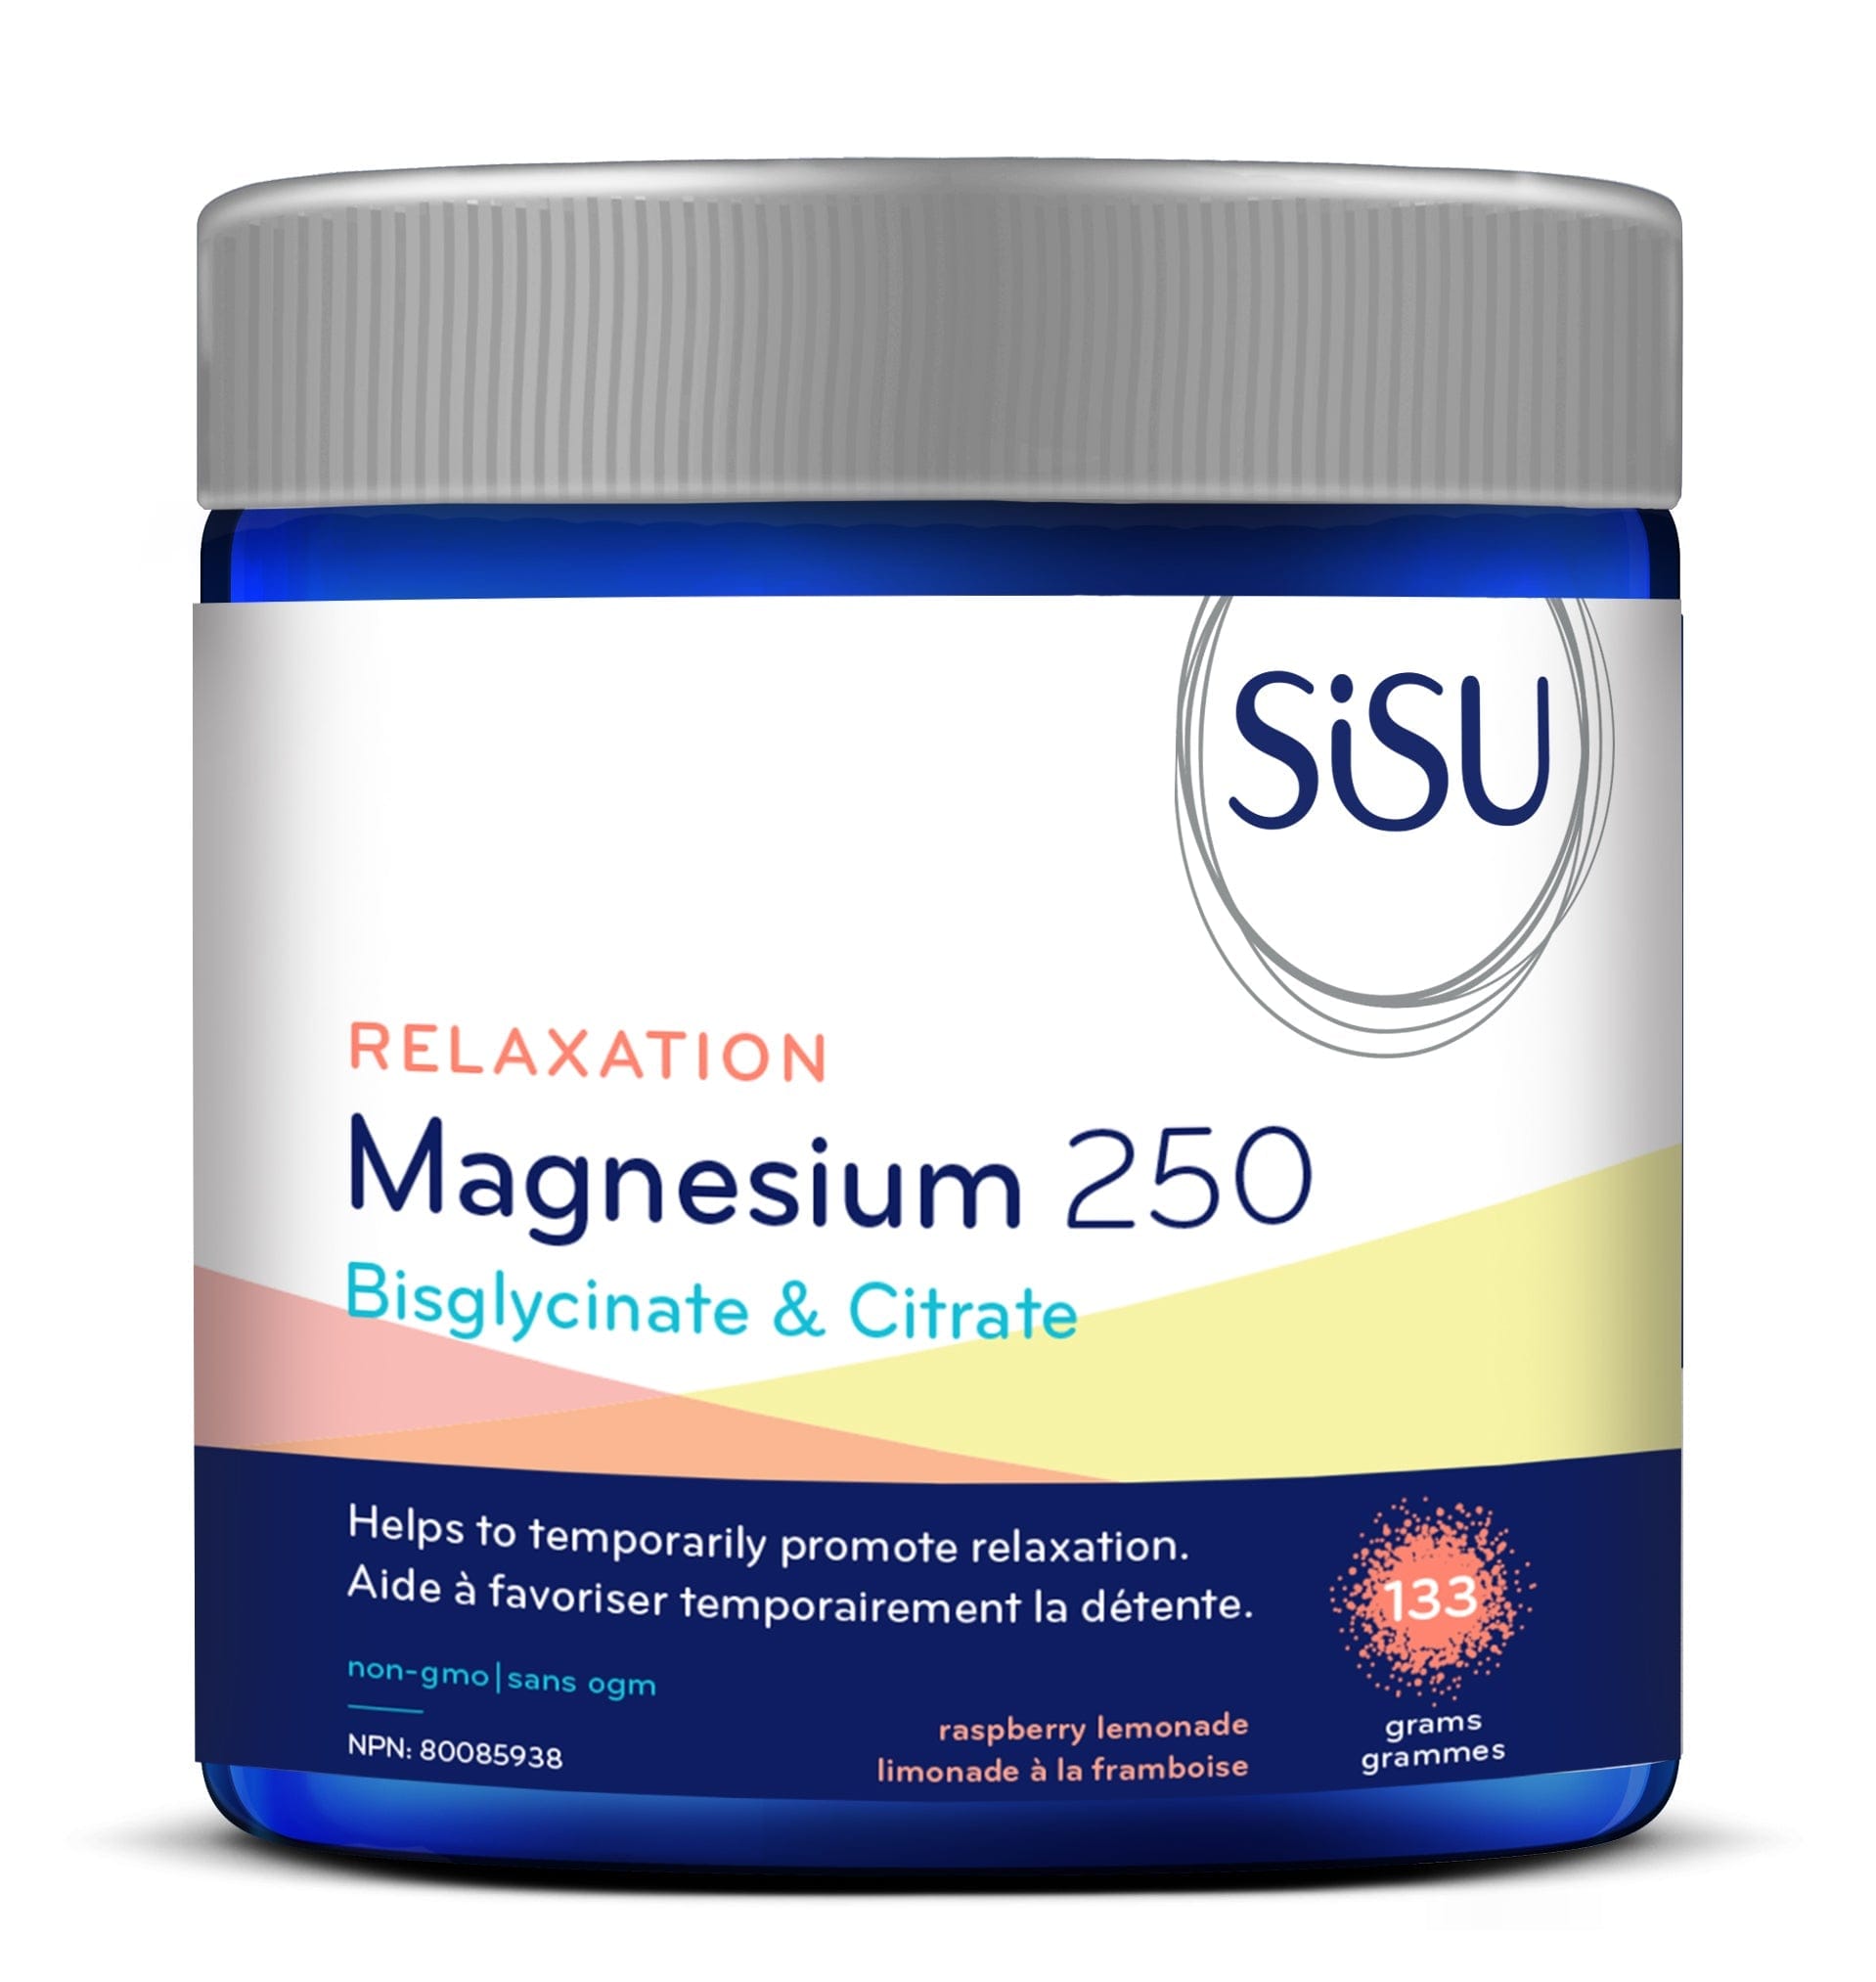 SISU Suppléments Magnésium 250 relaxation (bisglycinate et citrate) limonade/framboises  133g